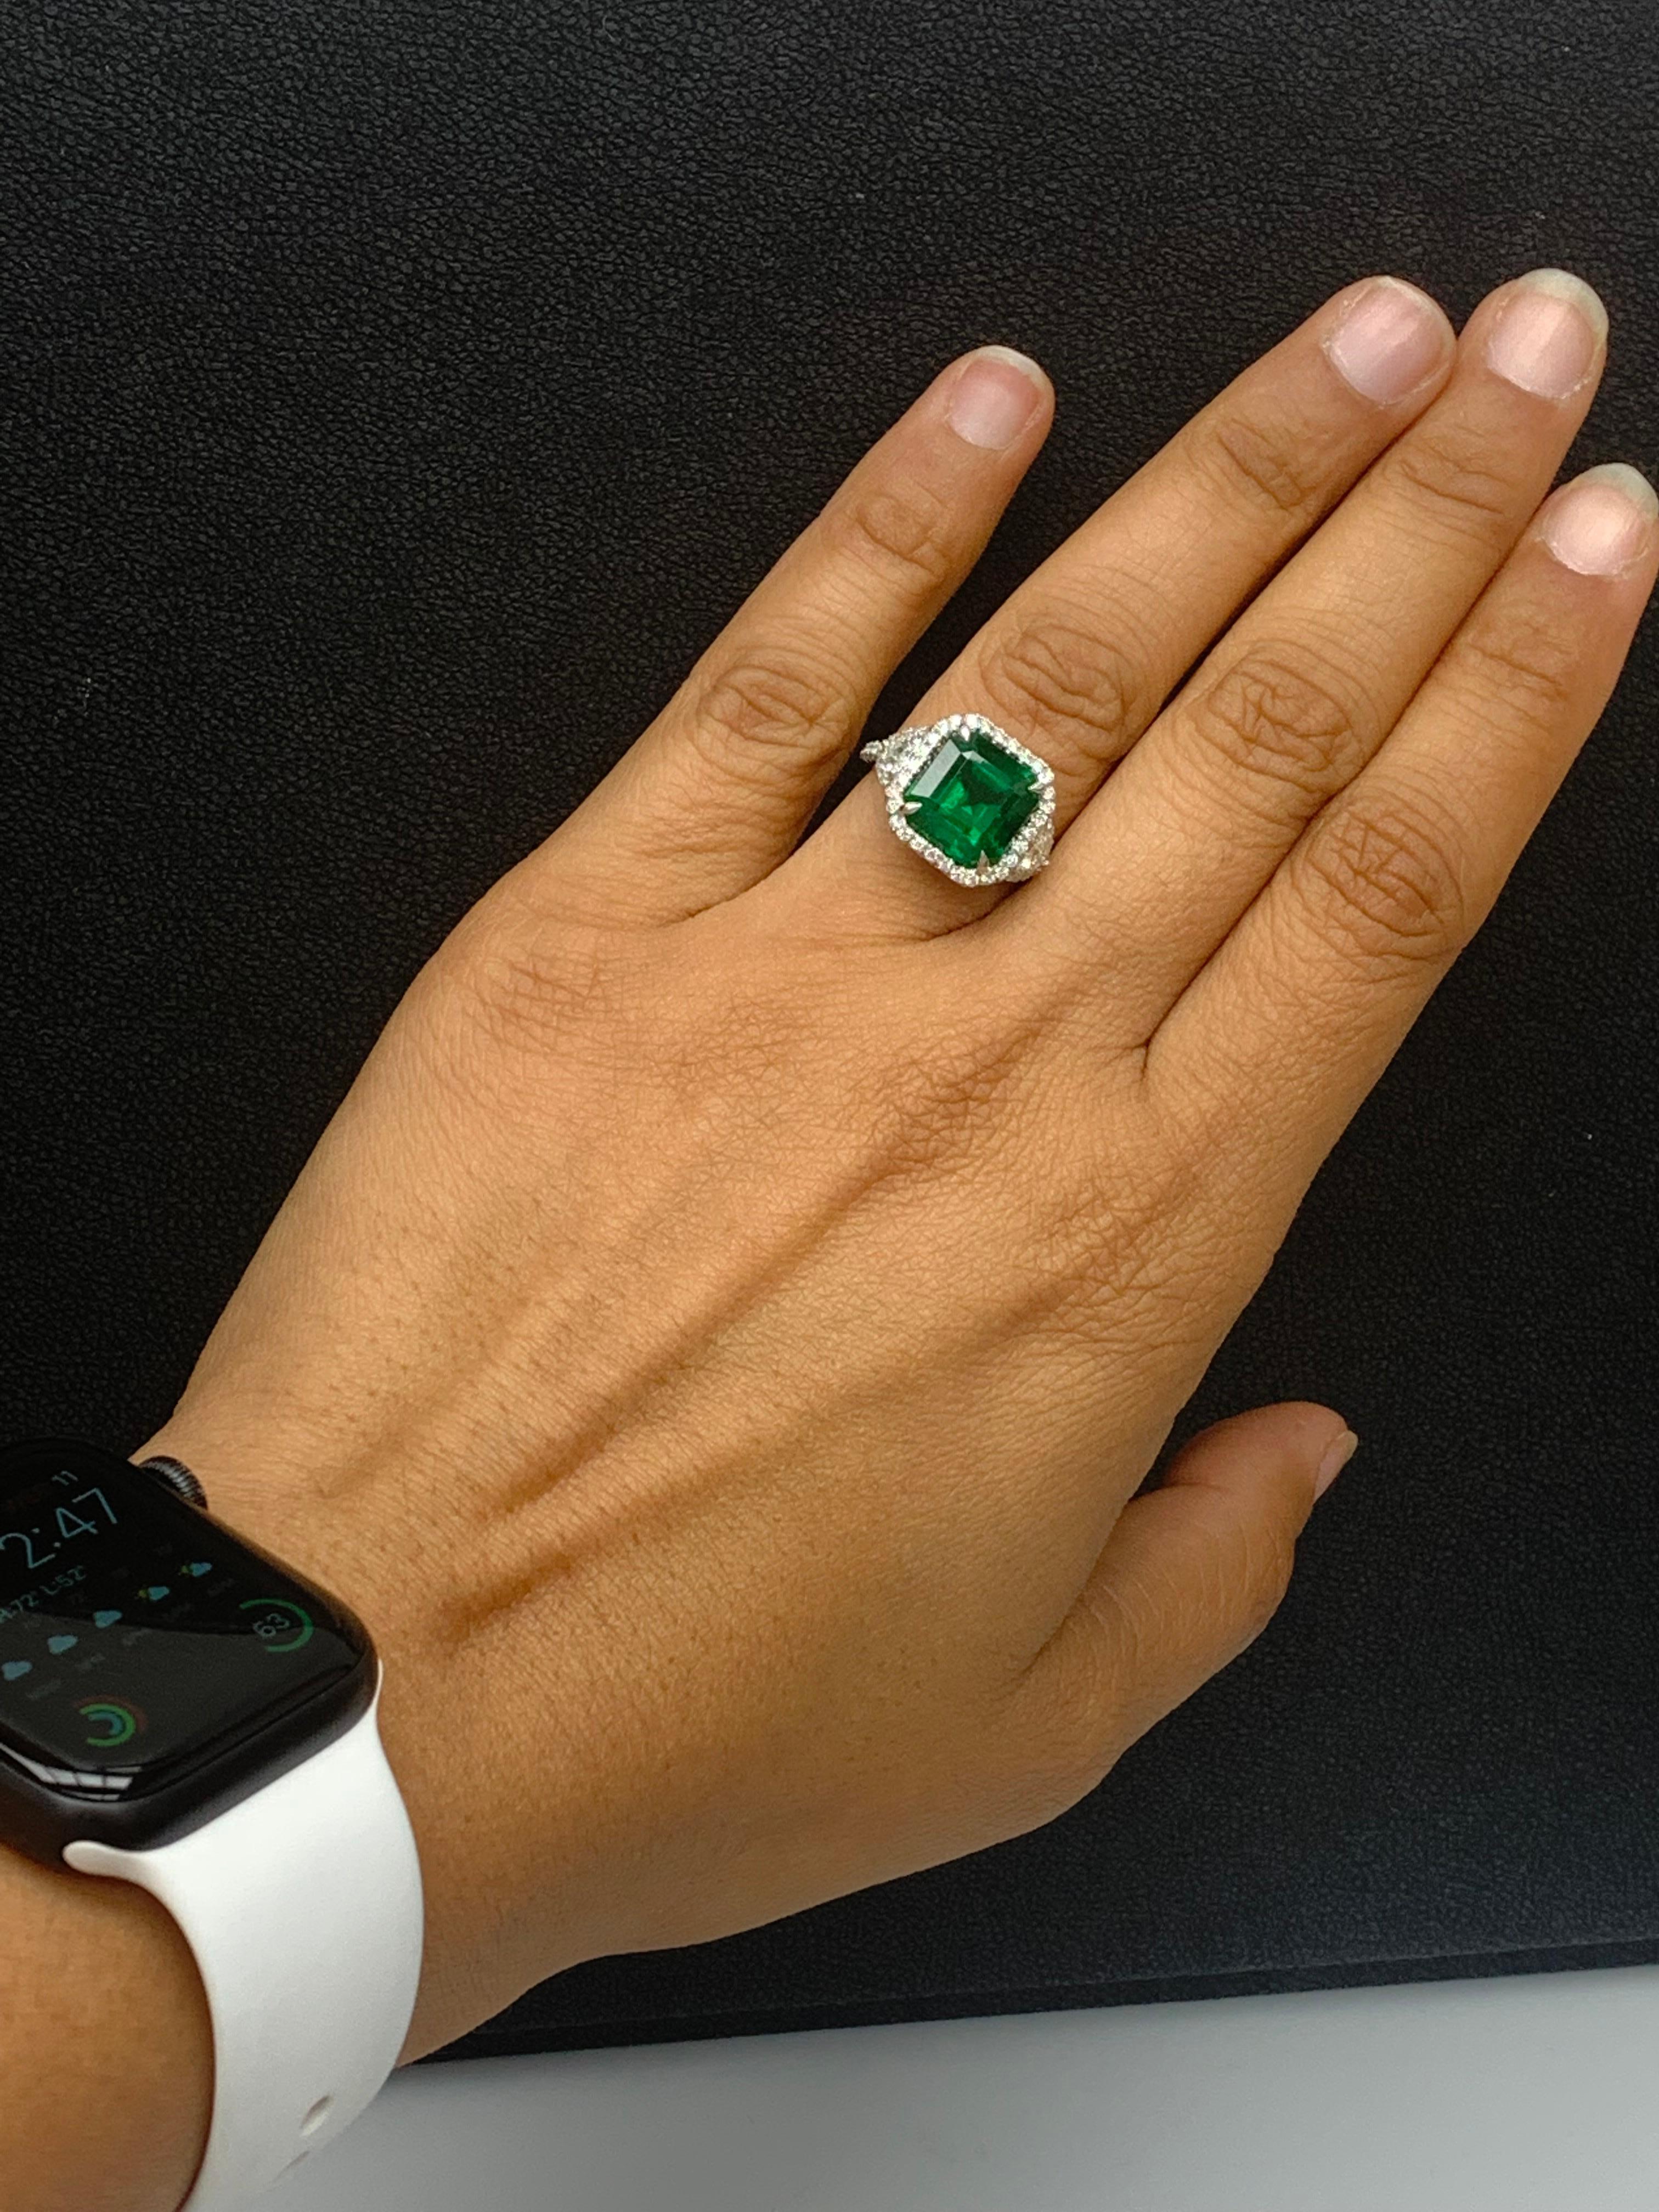 Certified 5.23 Carat Emerald Cut Emerald Diamond 3 Stone Halo Ring in Platinum For Sale 8